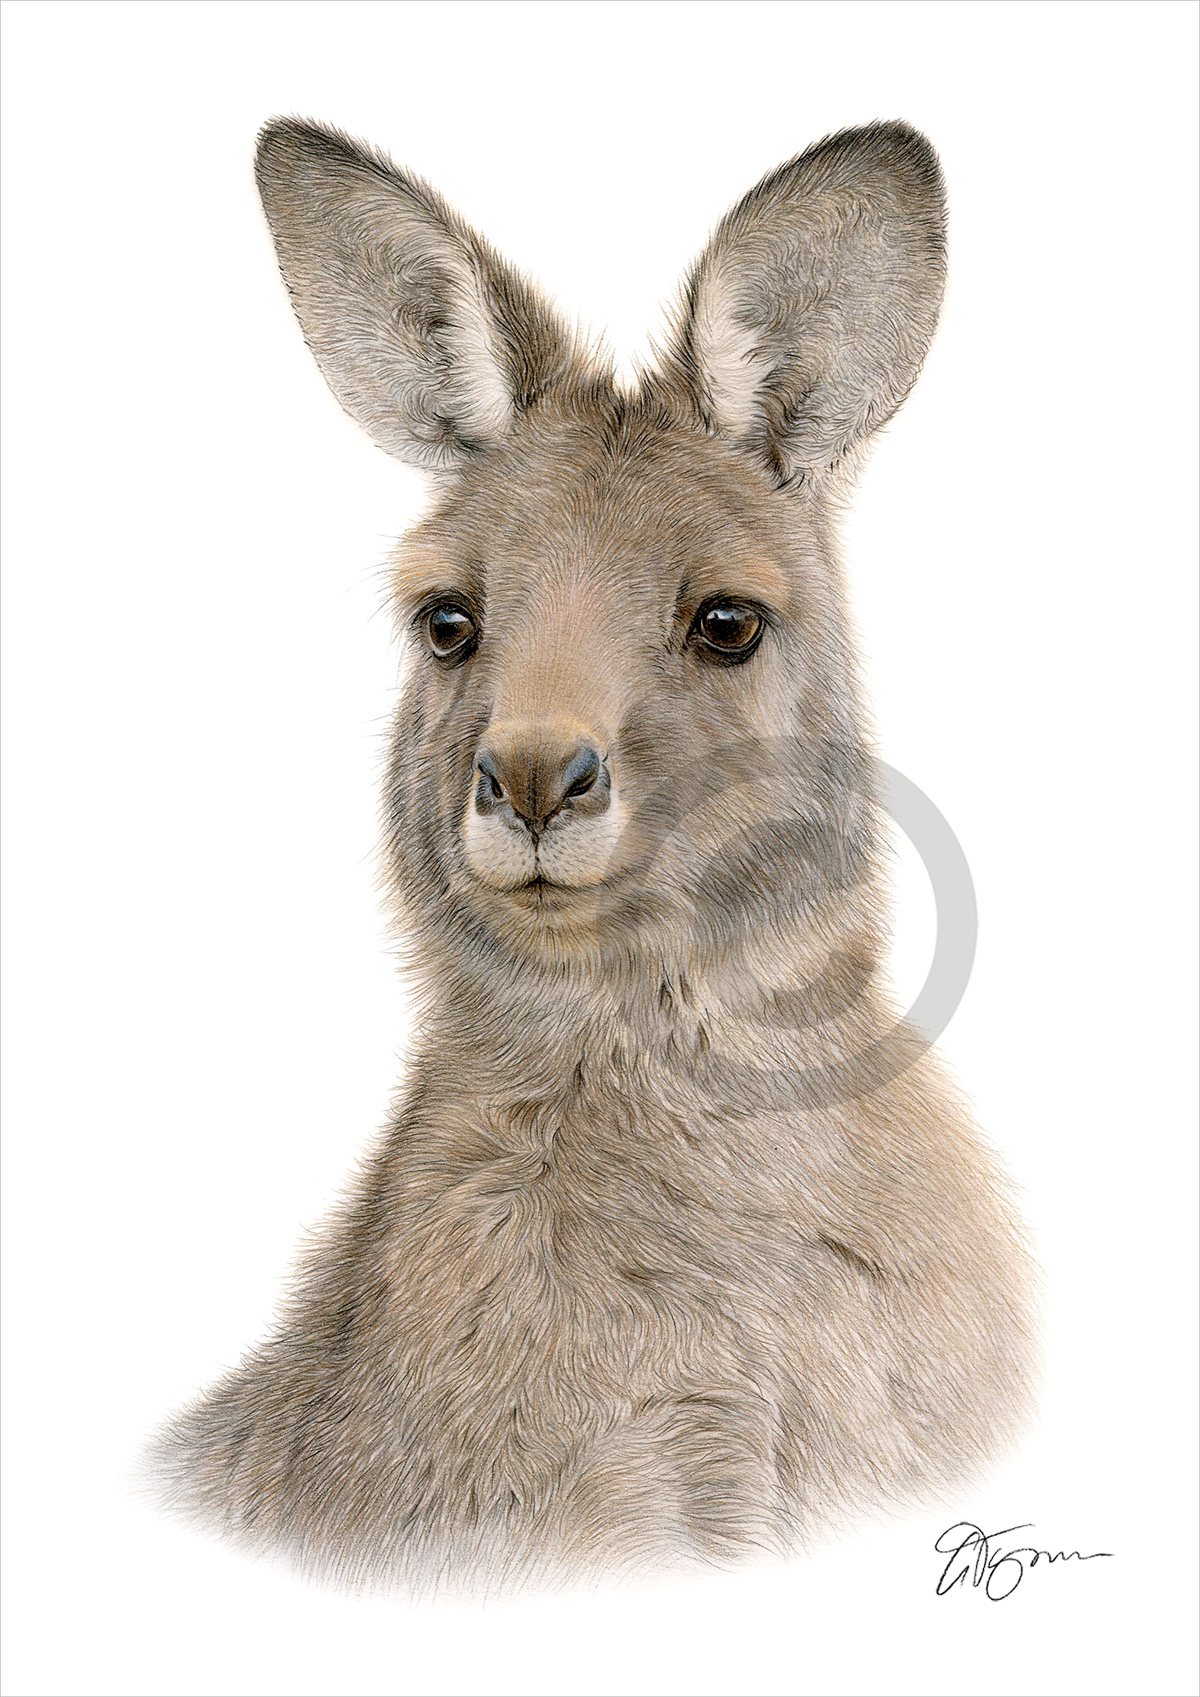 Colour pencil drawing of a Kangaroo by artist Gary Tymon